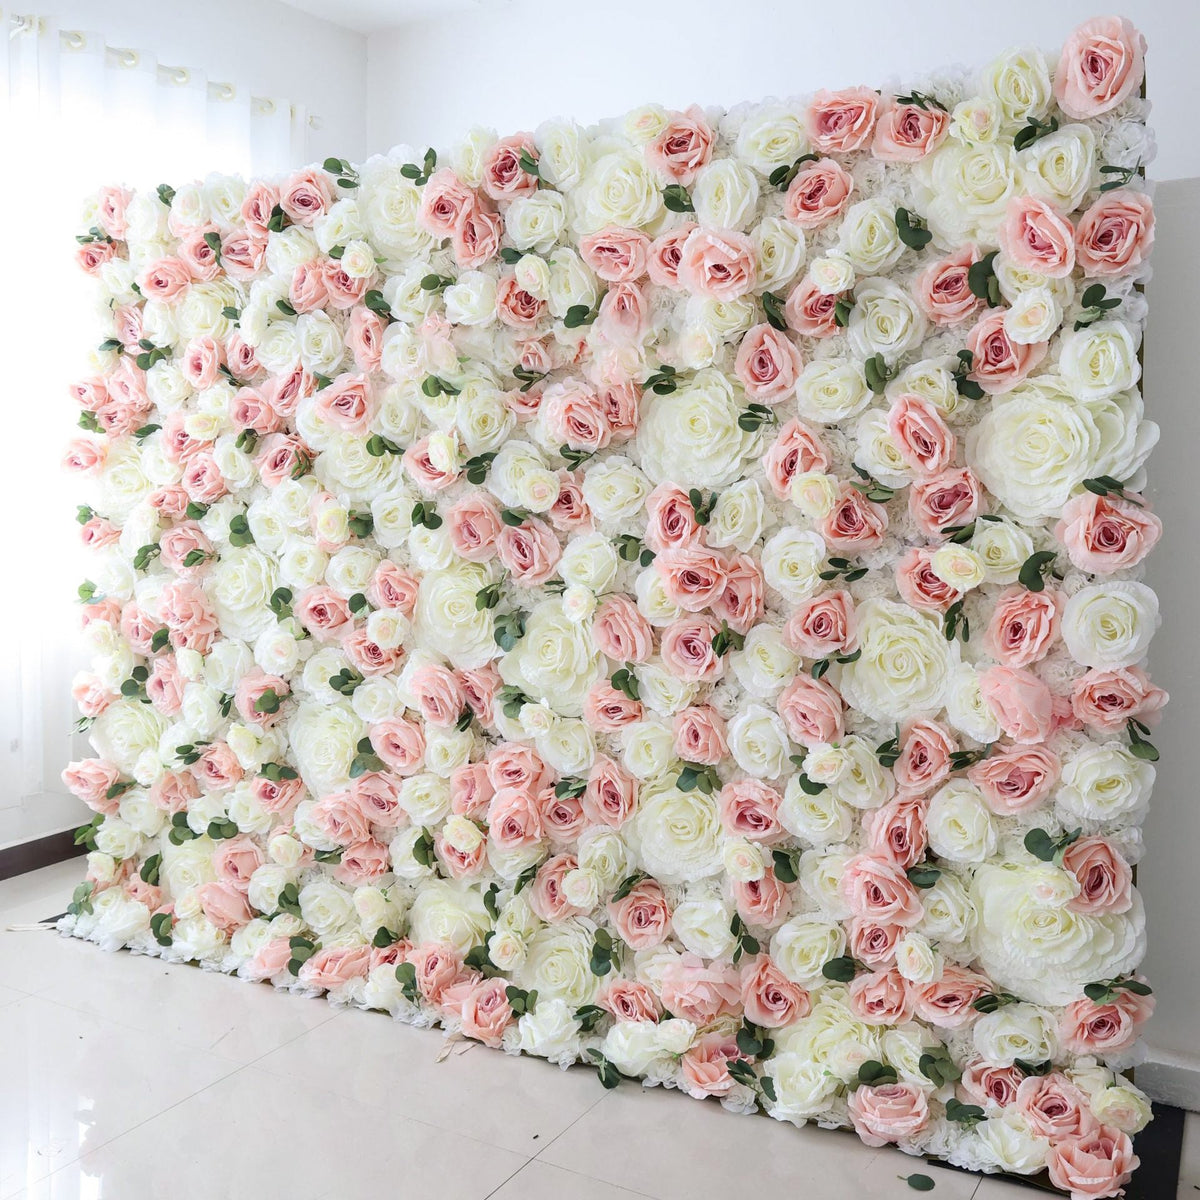 3D Artificial Flower Wall Arrangement Wedding Party Birthday Backdrop Decor HQ1319